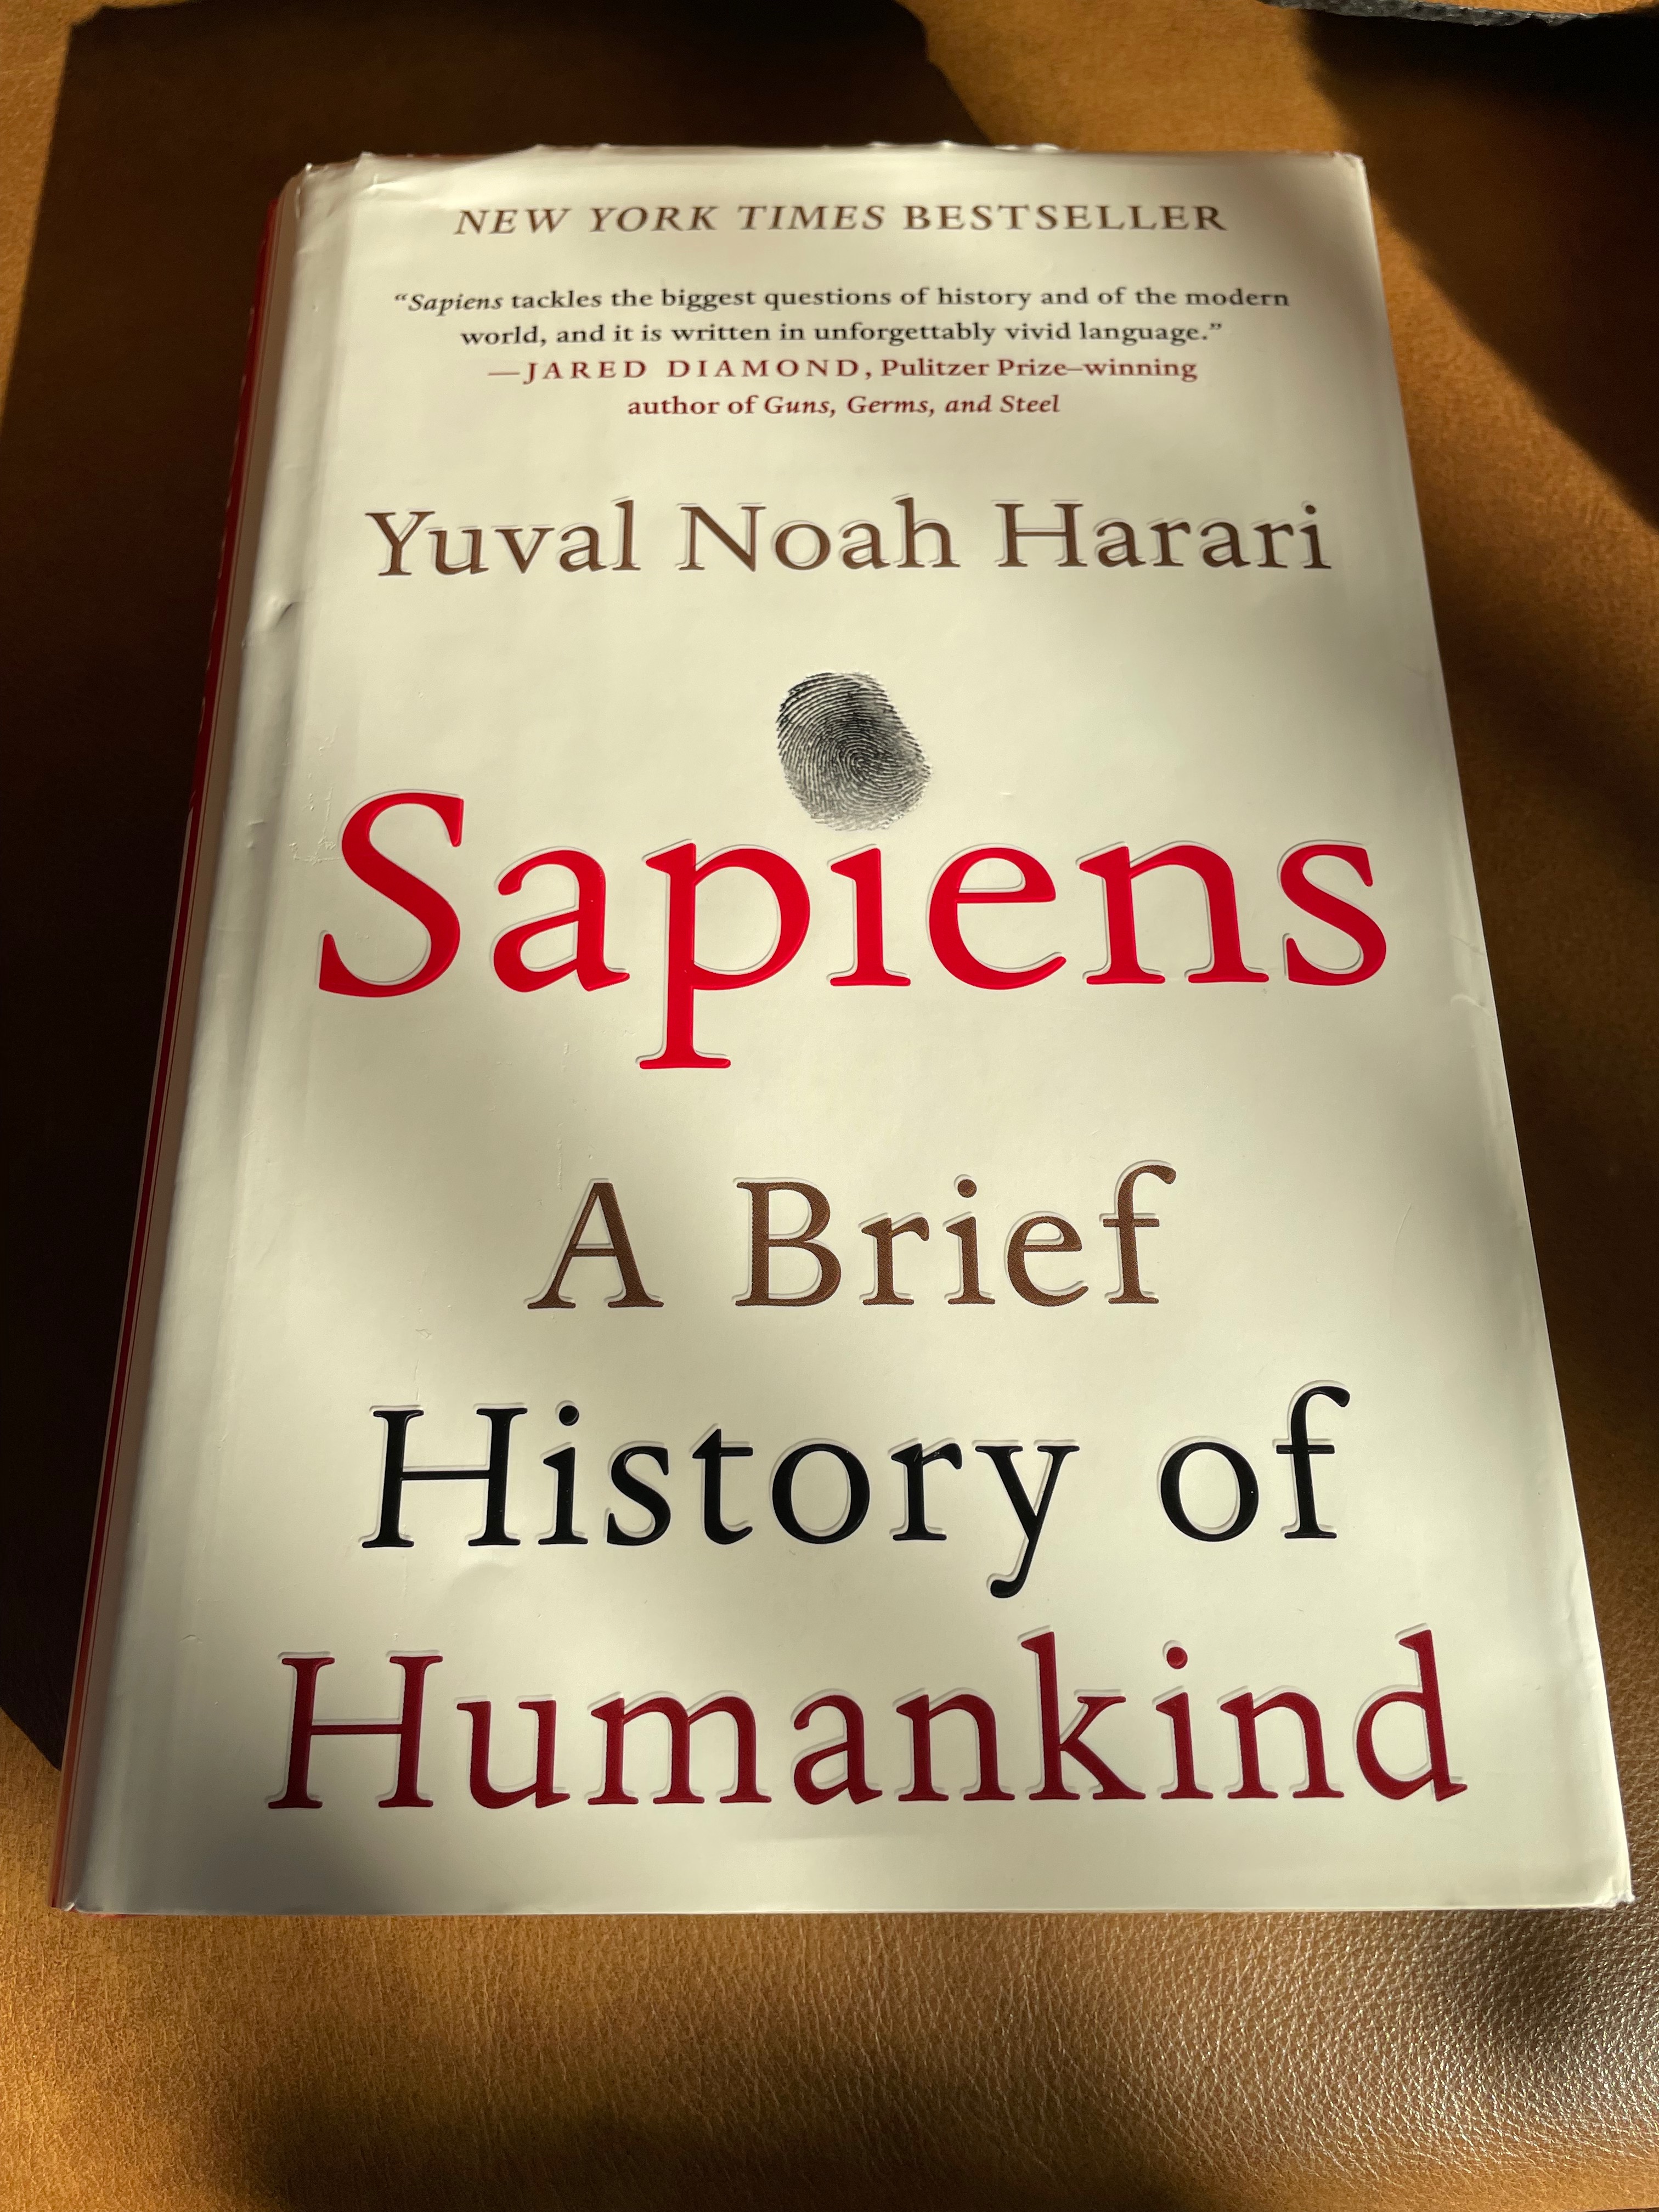 Image of the book, Sapiens by Yuval Noah Harari